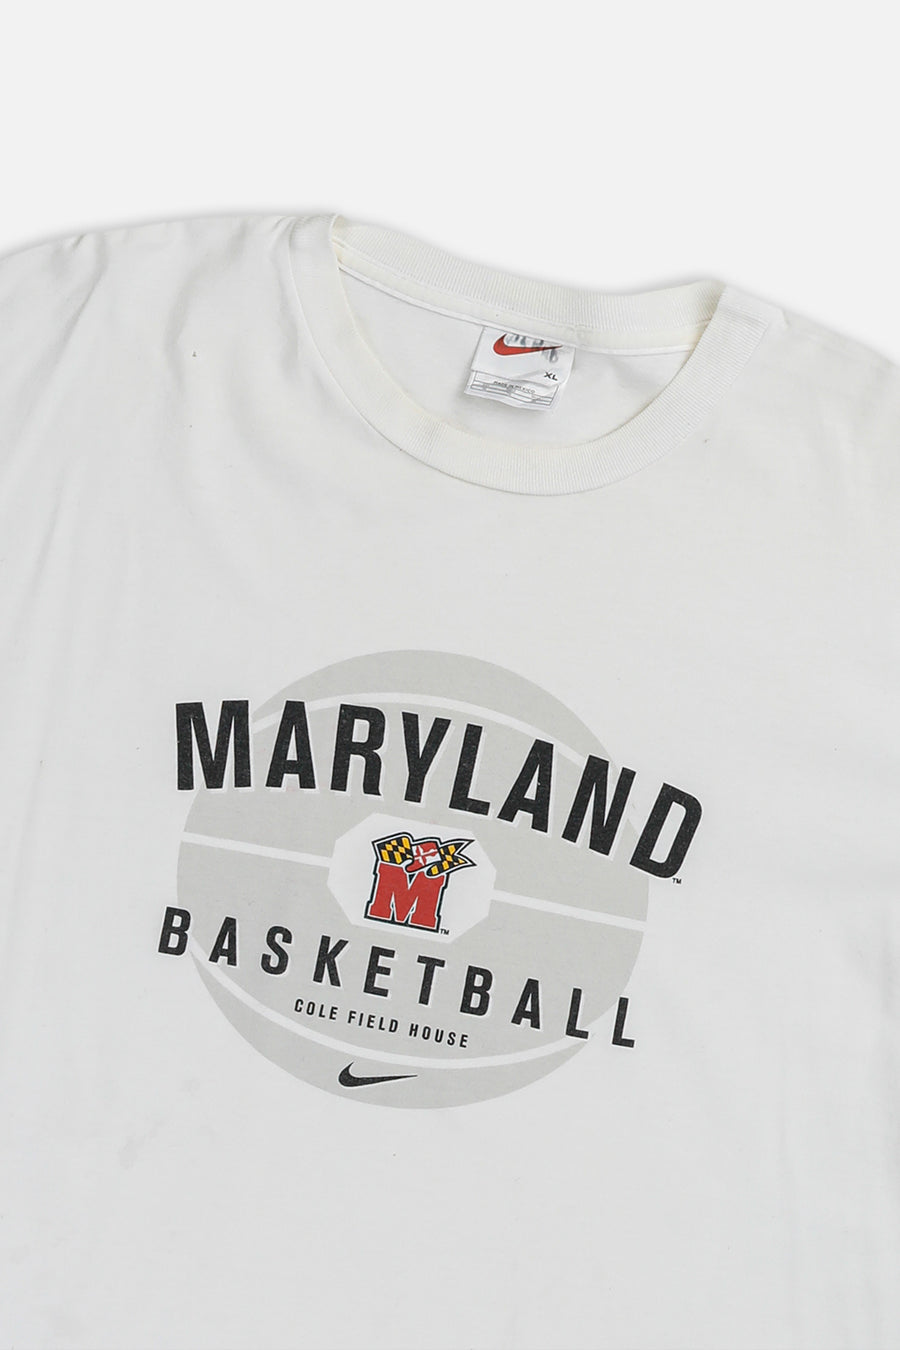 Vintage Maryland Basketball Nike Tee - XL